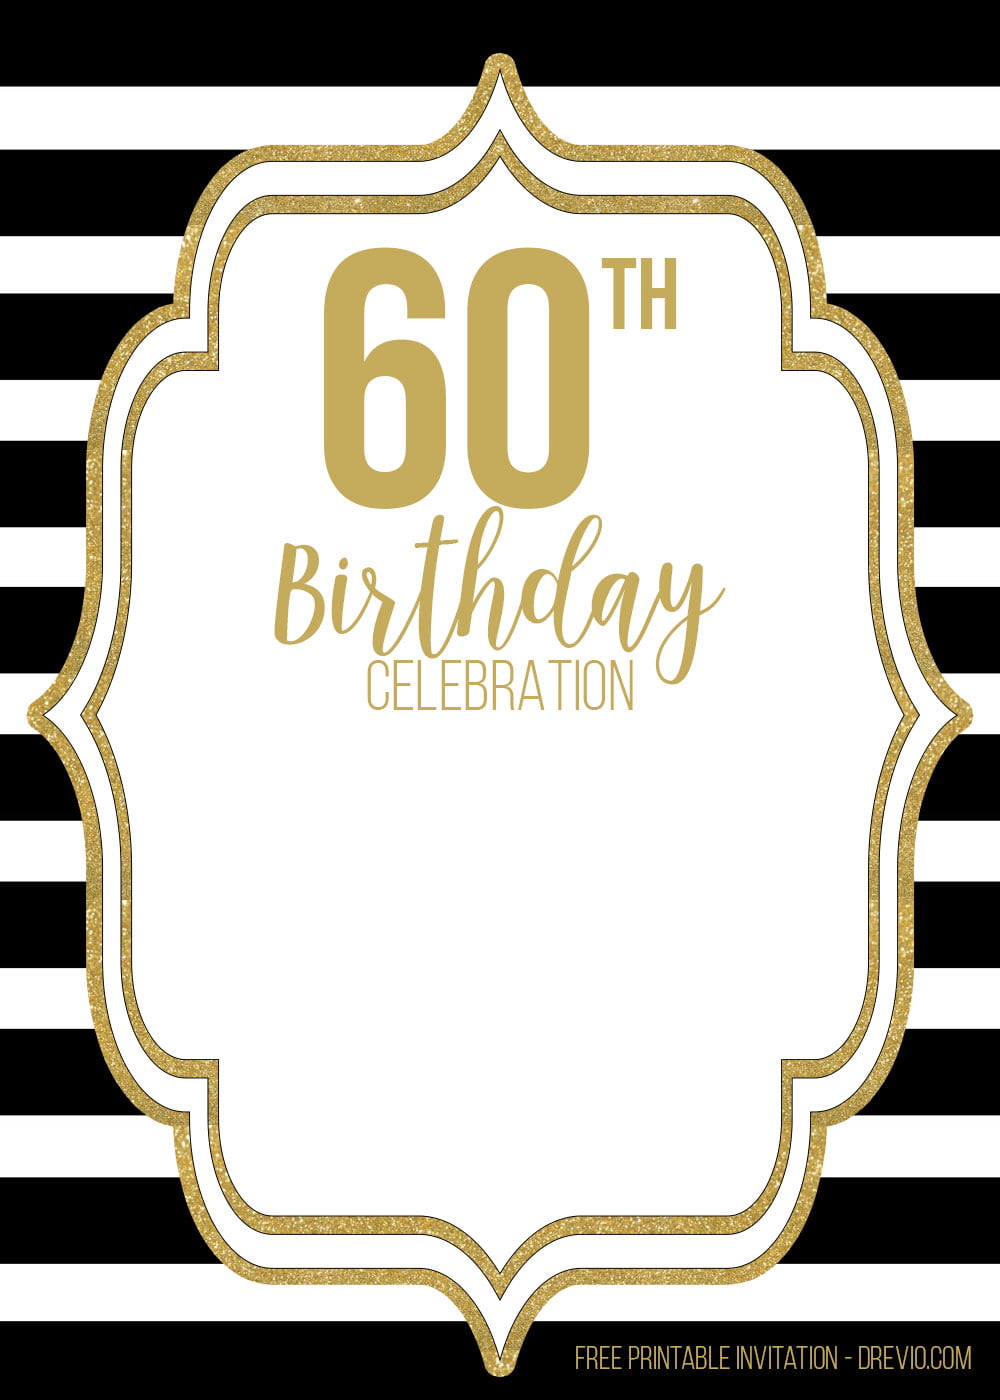 FREE-60th-Birthday-invitation-template